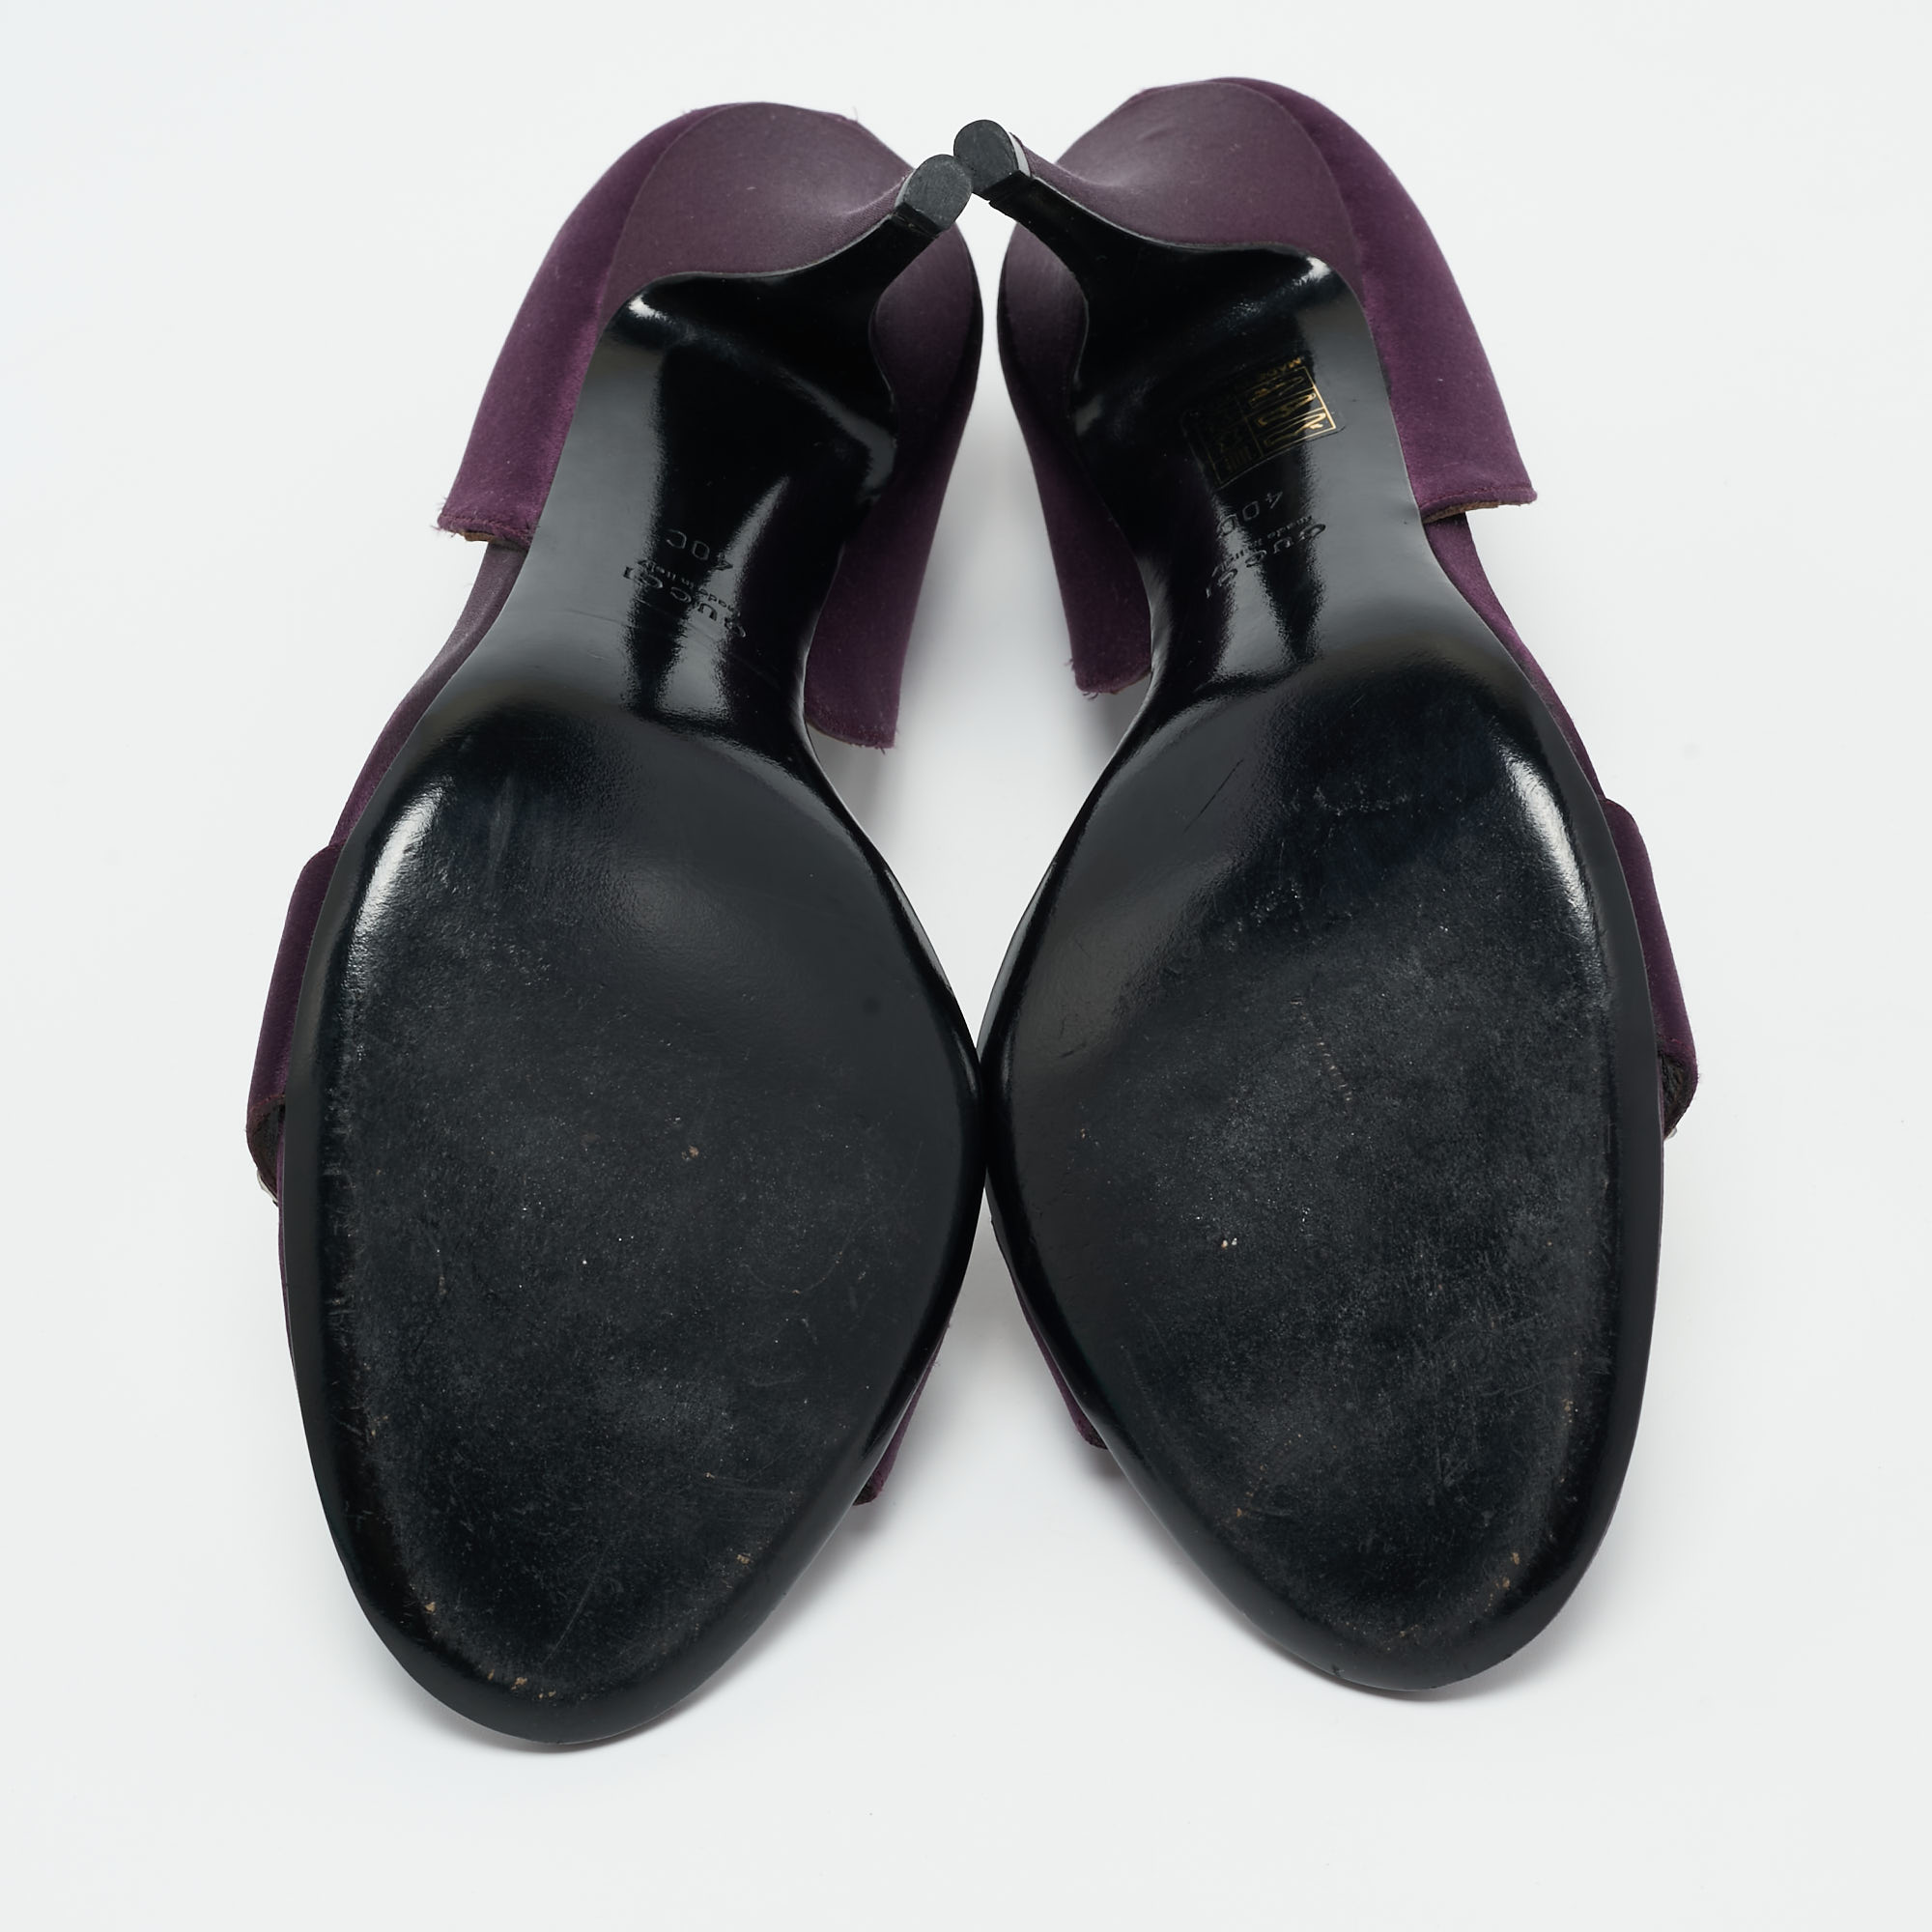 Gucci Purple Satin Crystal Embellished Sandals Size 40